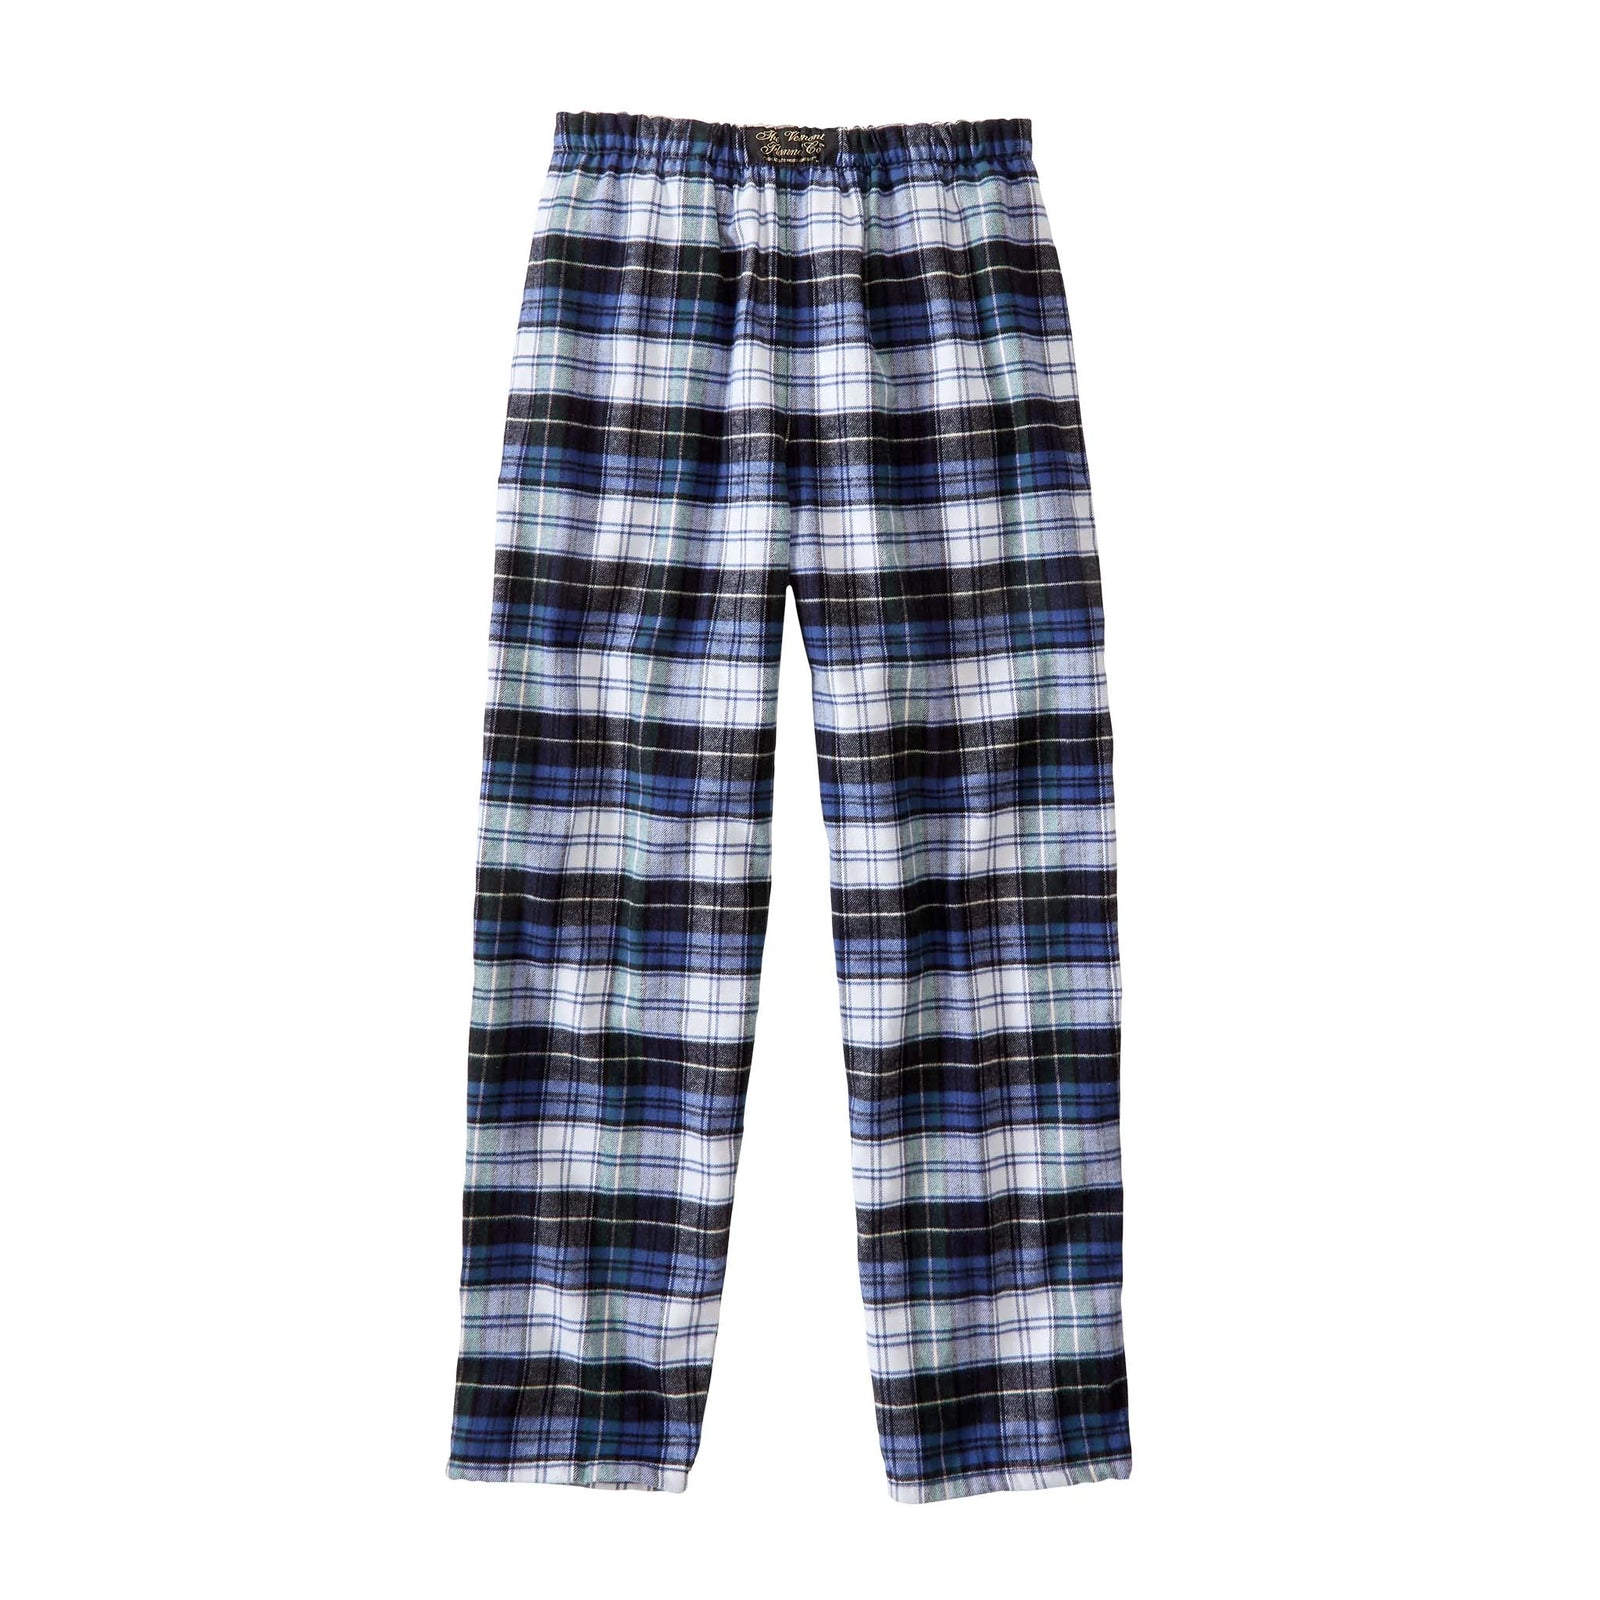 Pajamas - All American Clothing Co